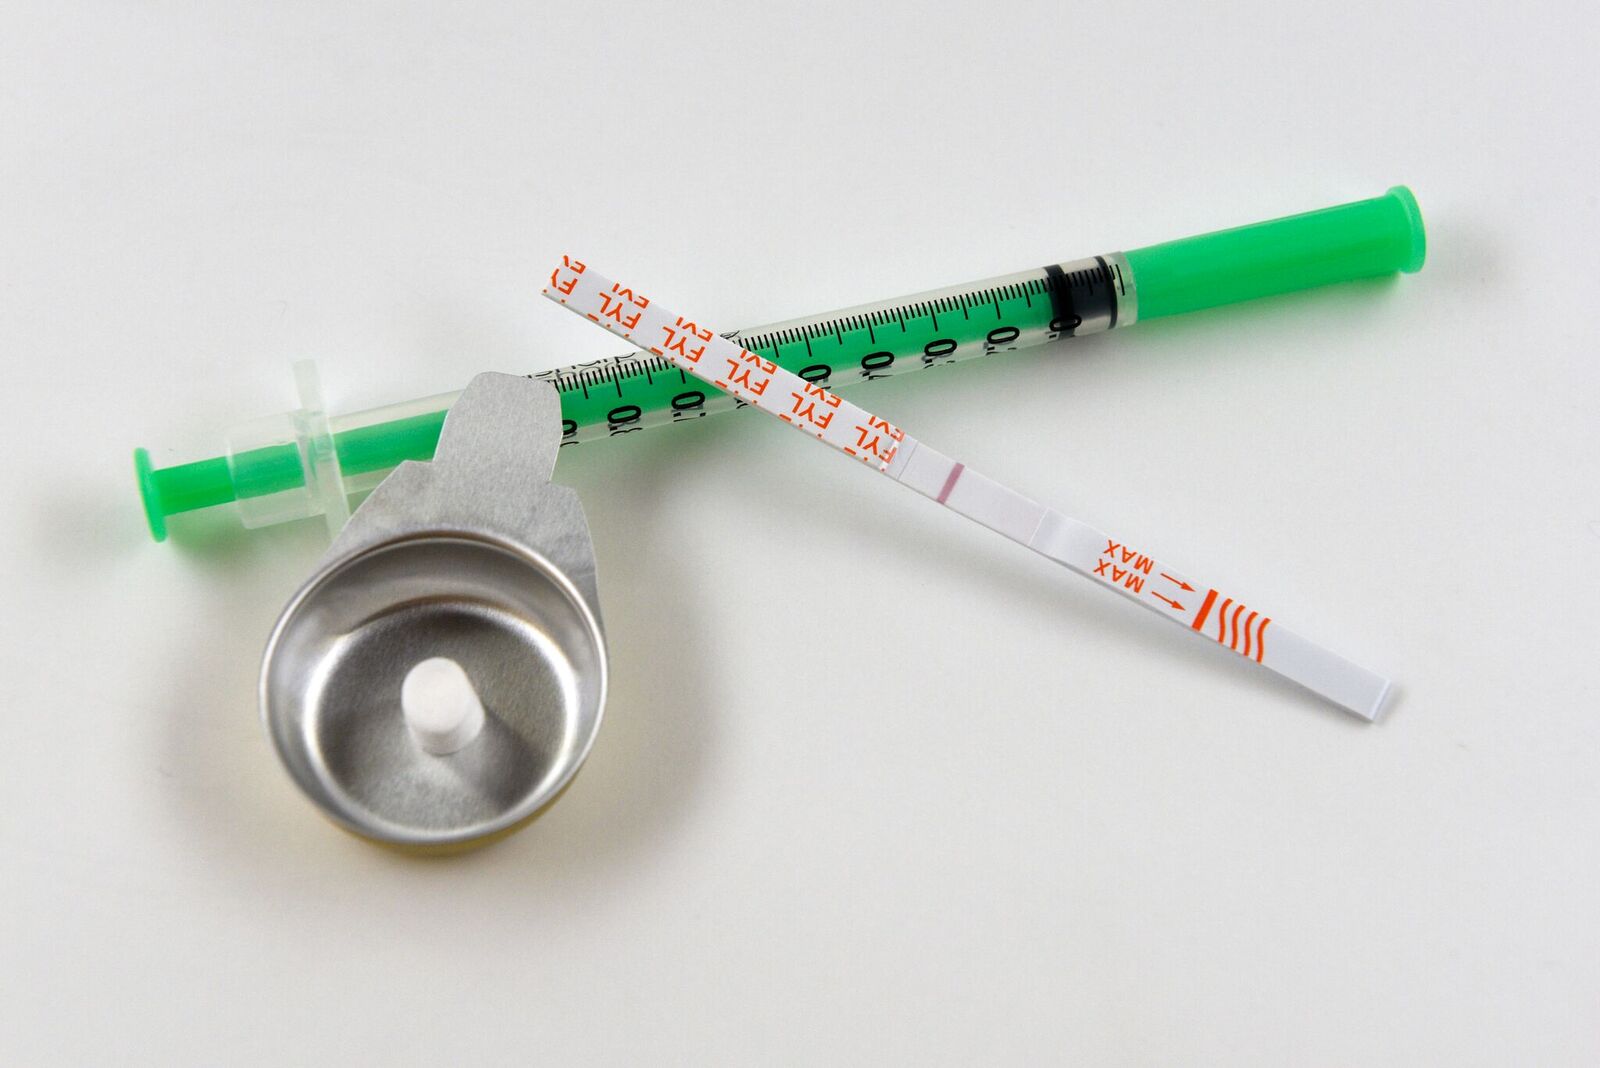 Syringe and fentanyl test strip